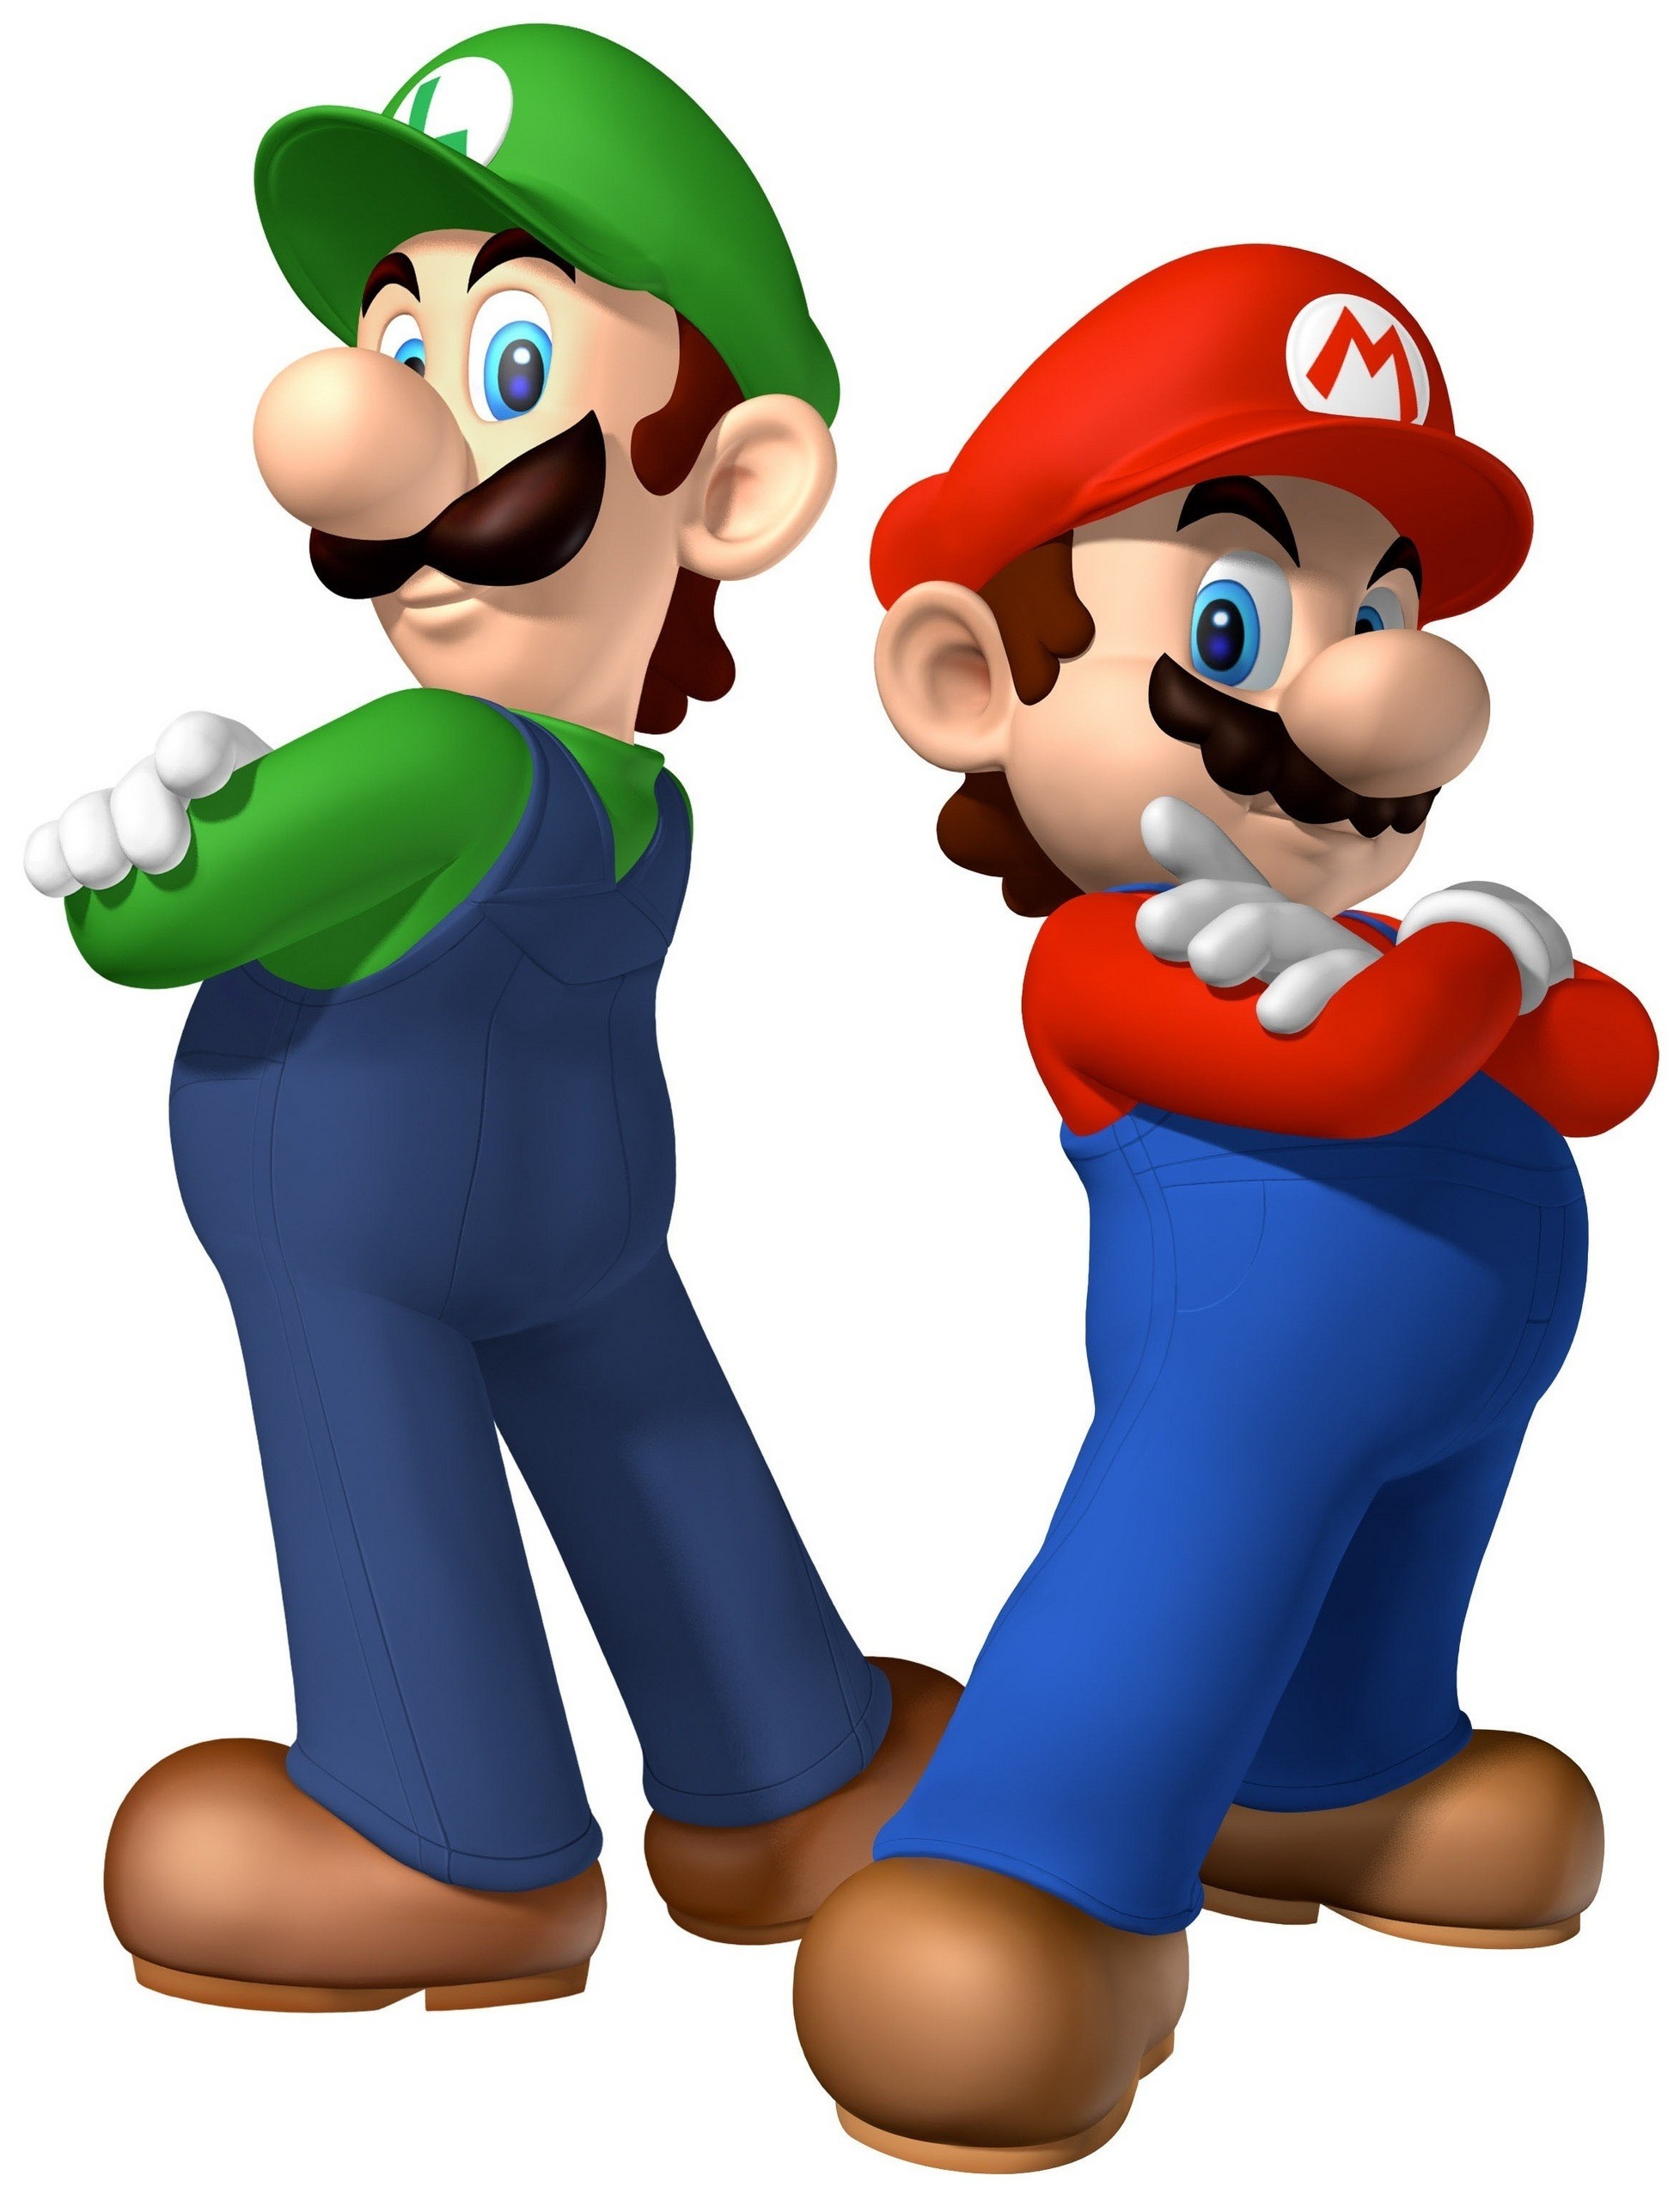 1955x2560 Mario and Luigi images The Mario Bros. HD wallpaper and background photos